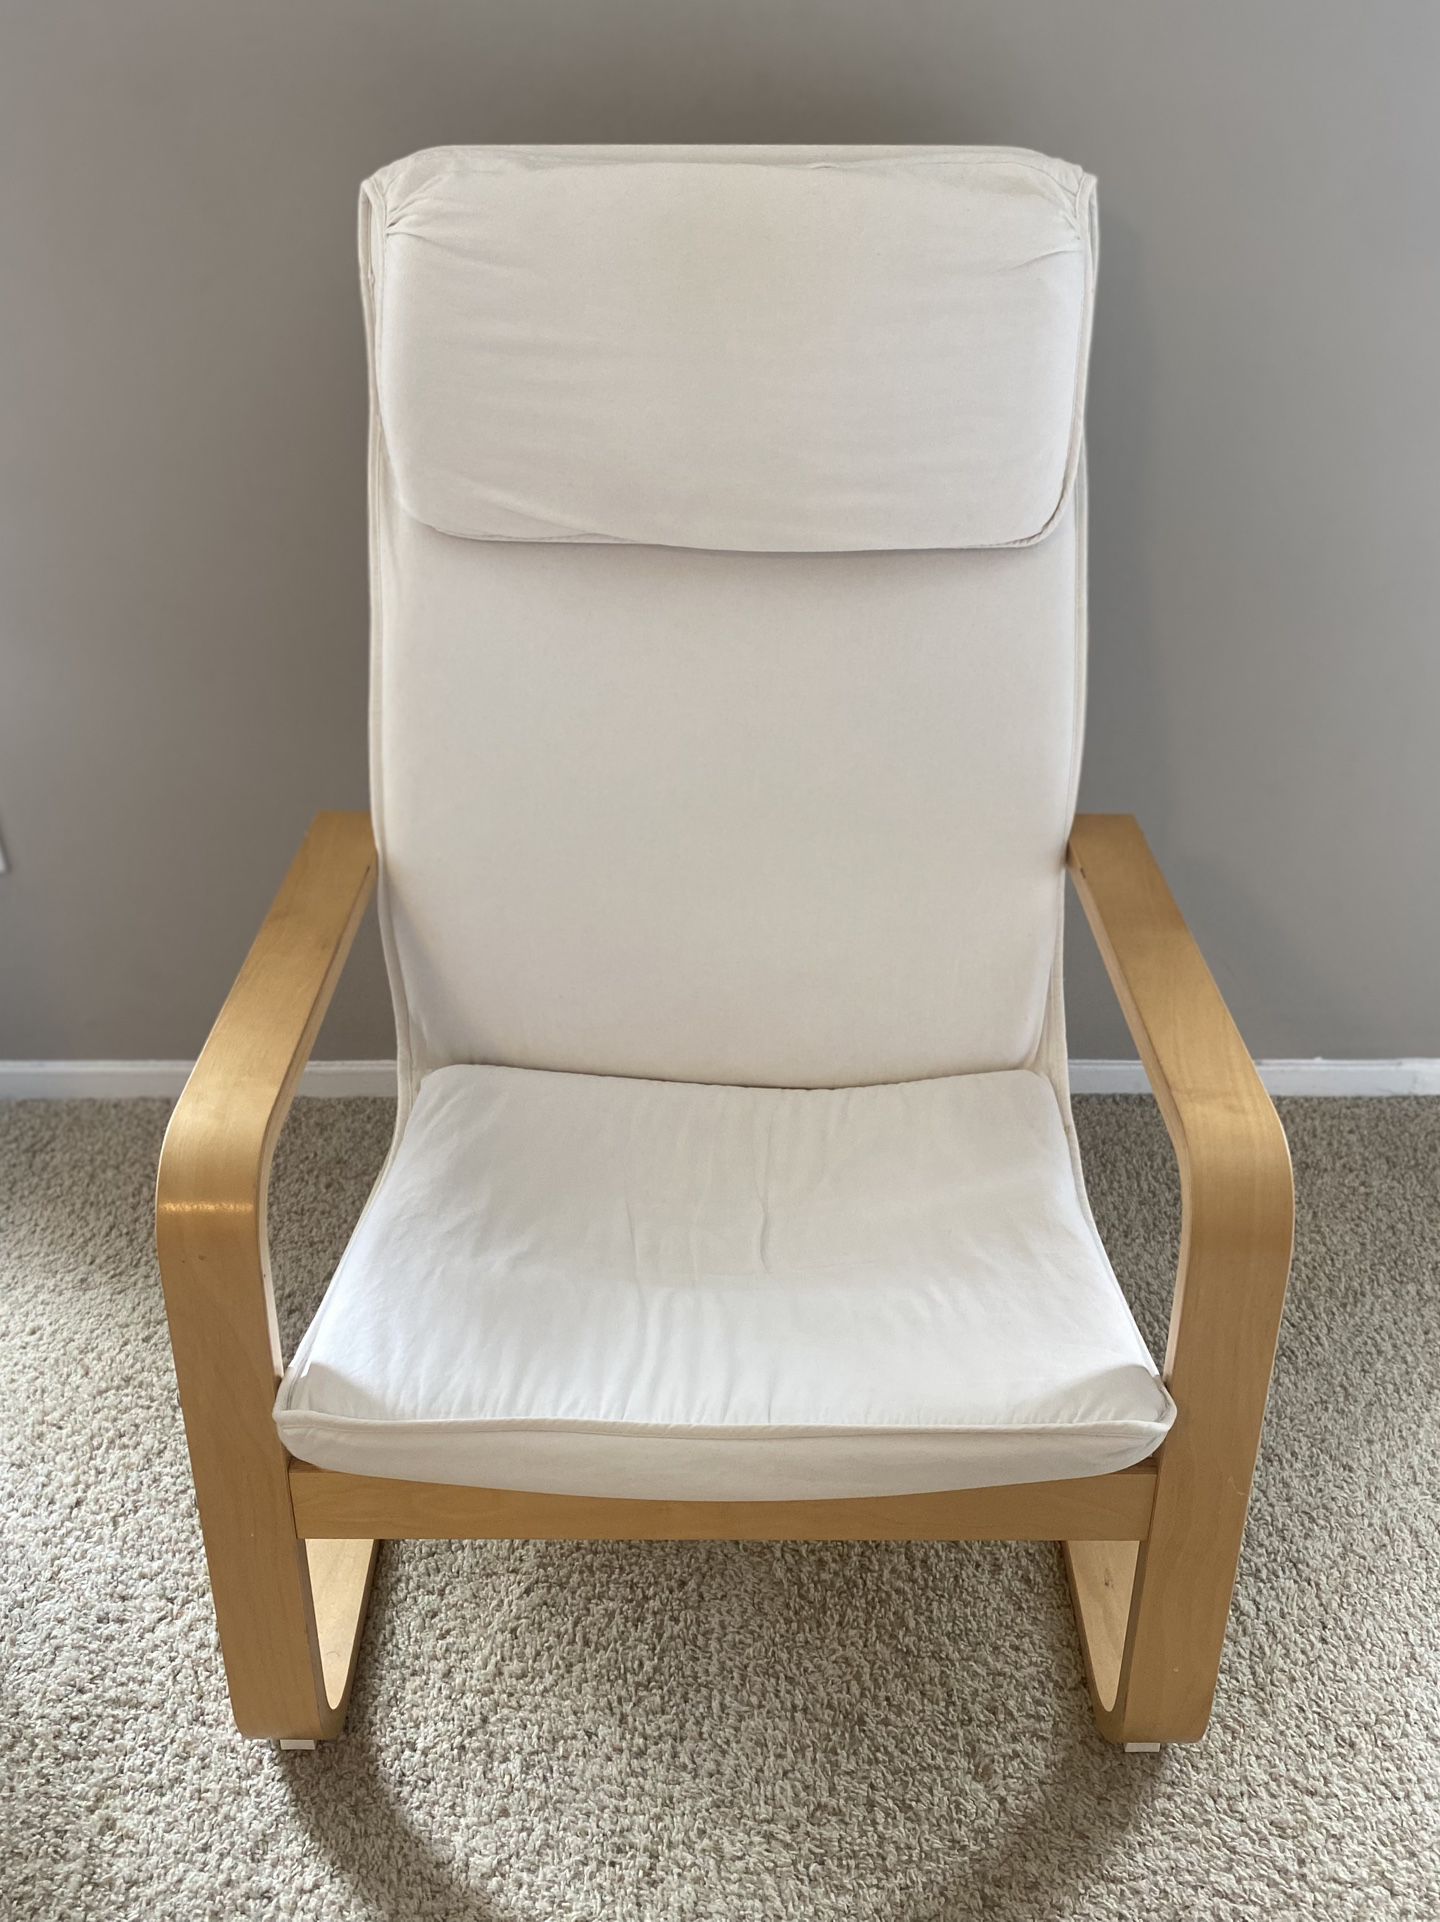 Ikea armchair